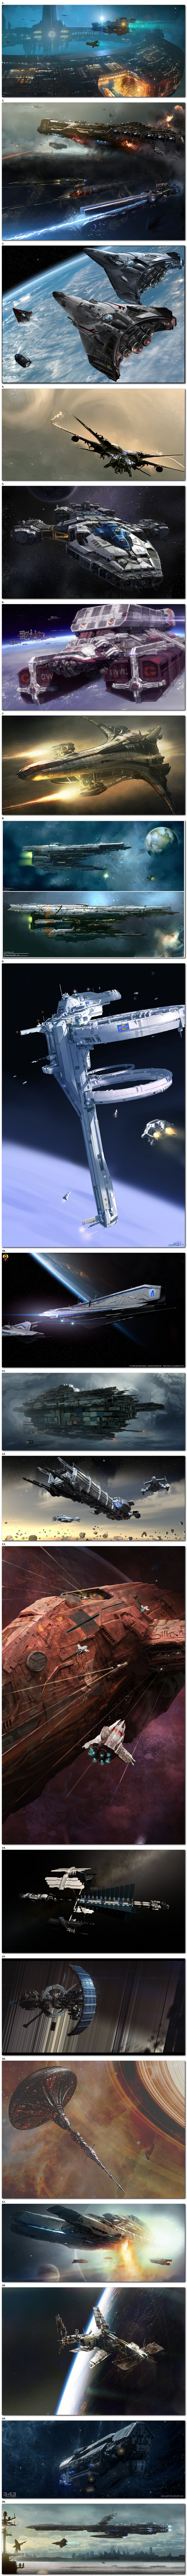 Spaceships #4